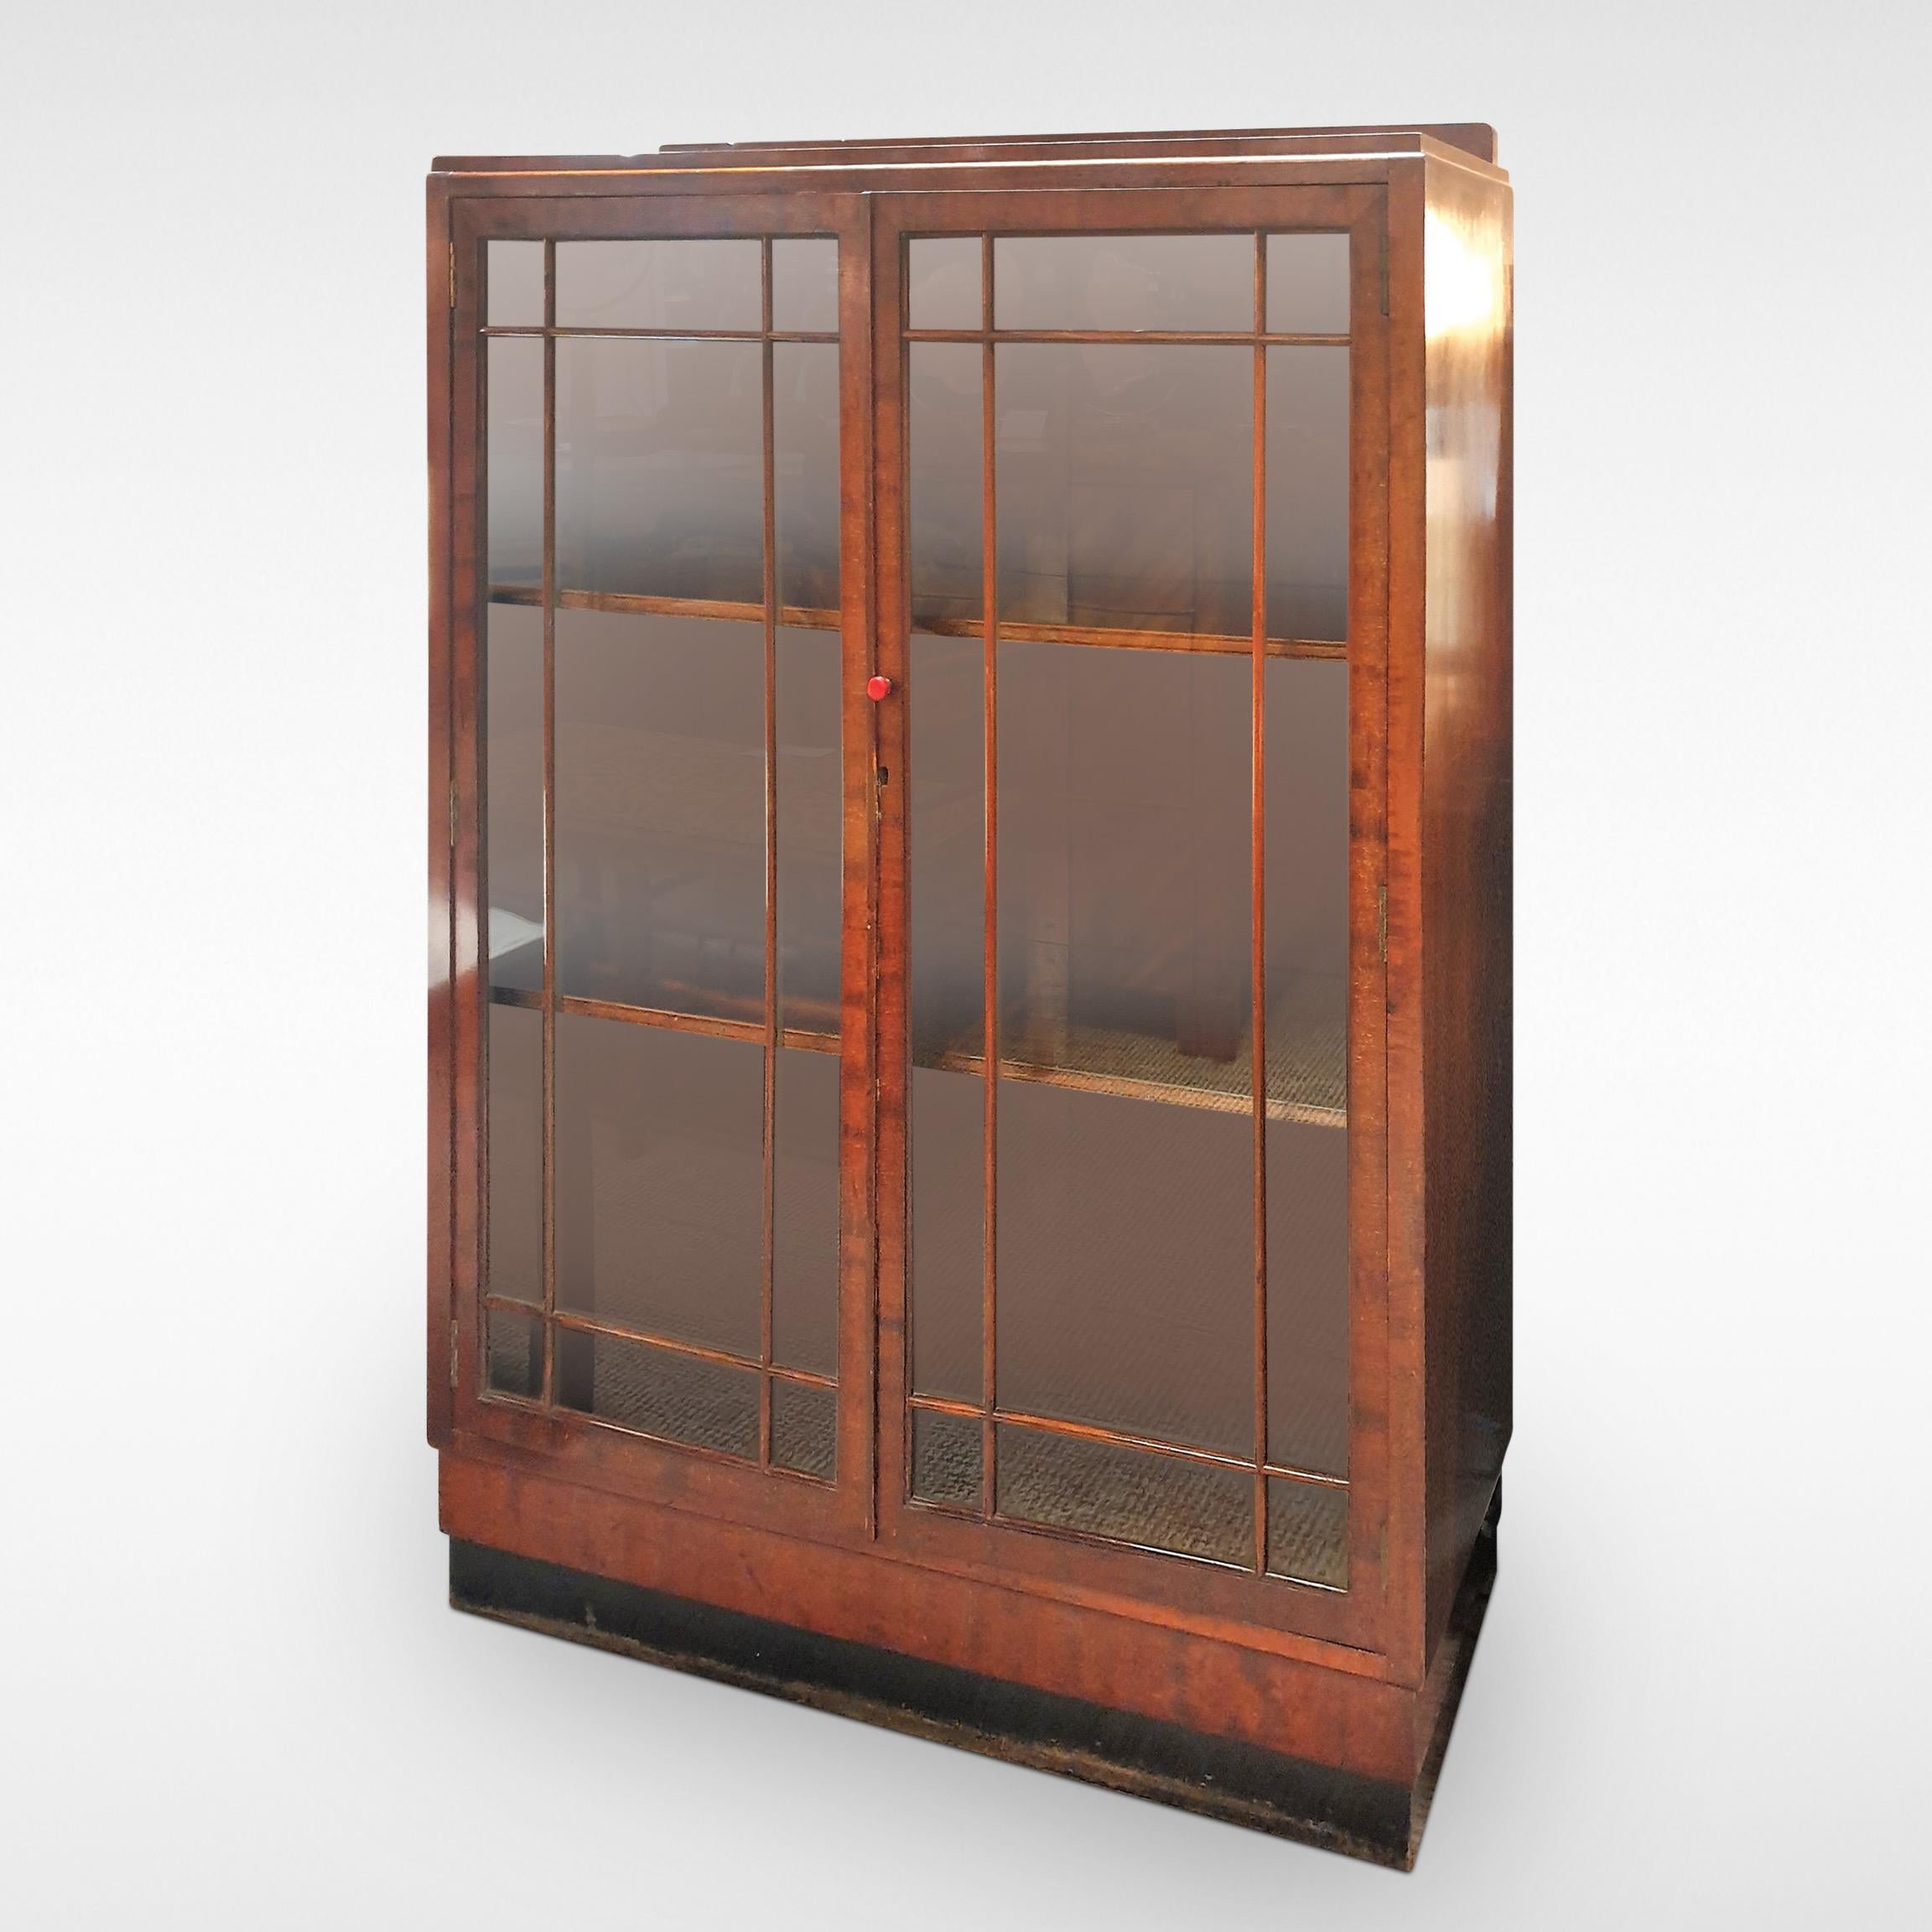 Art Deco glazed Bookcase or Display Cabinet in Mahogany, circa 1935.